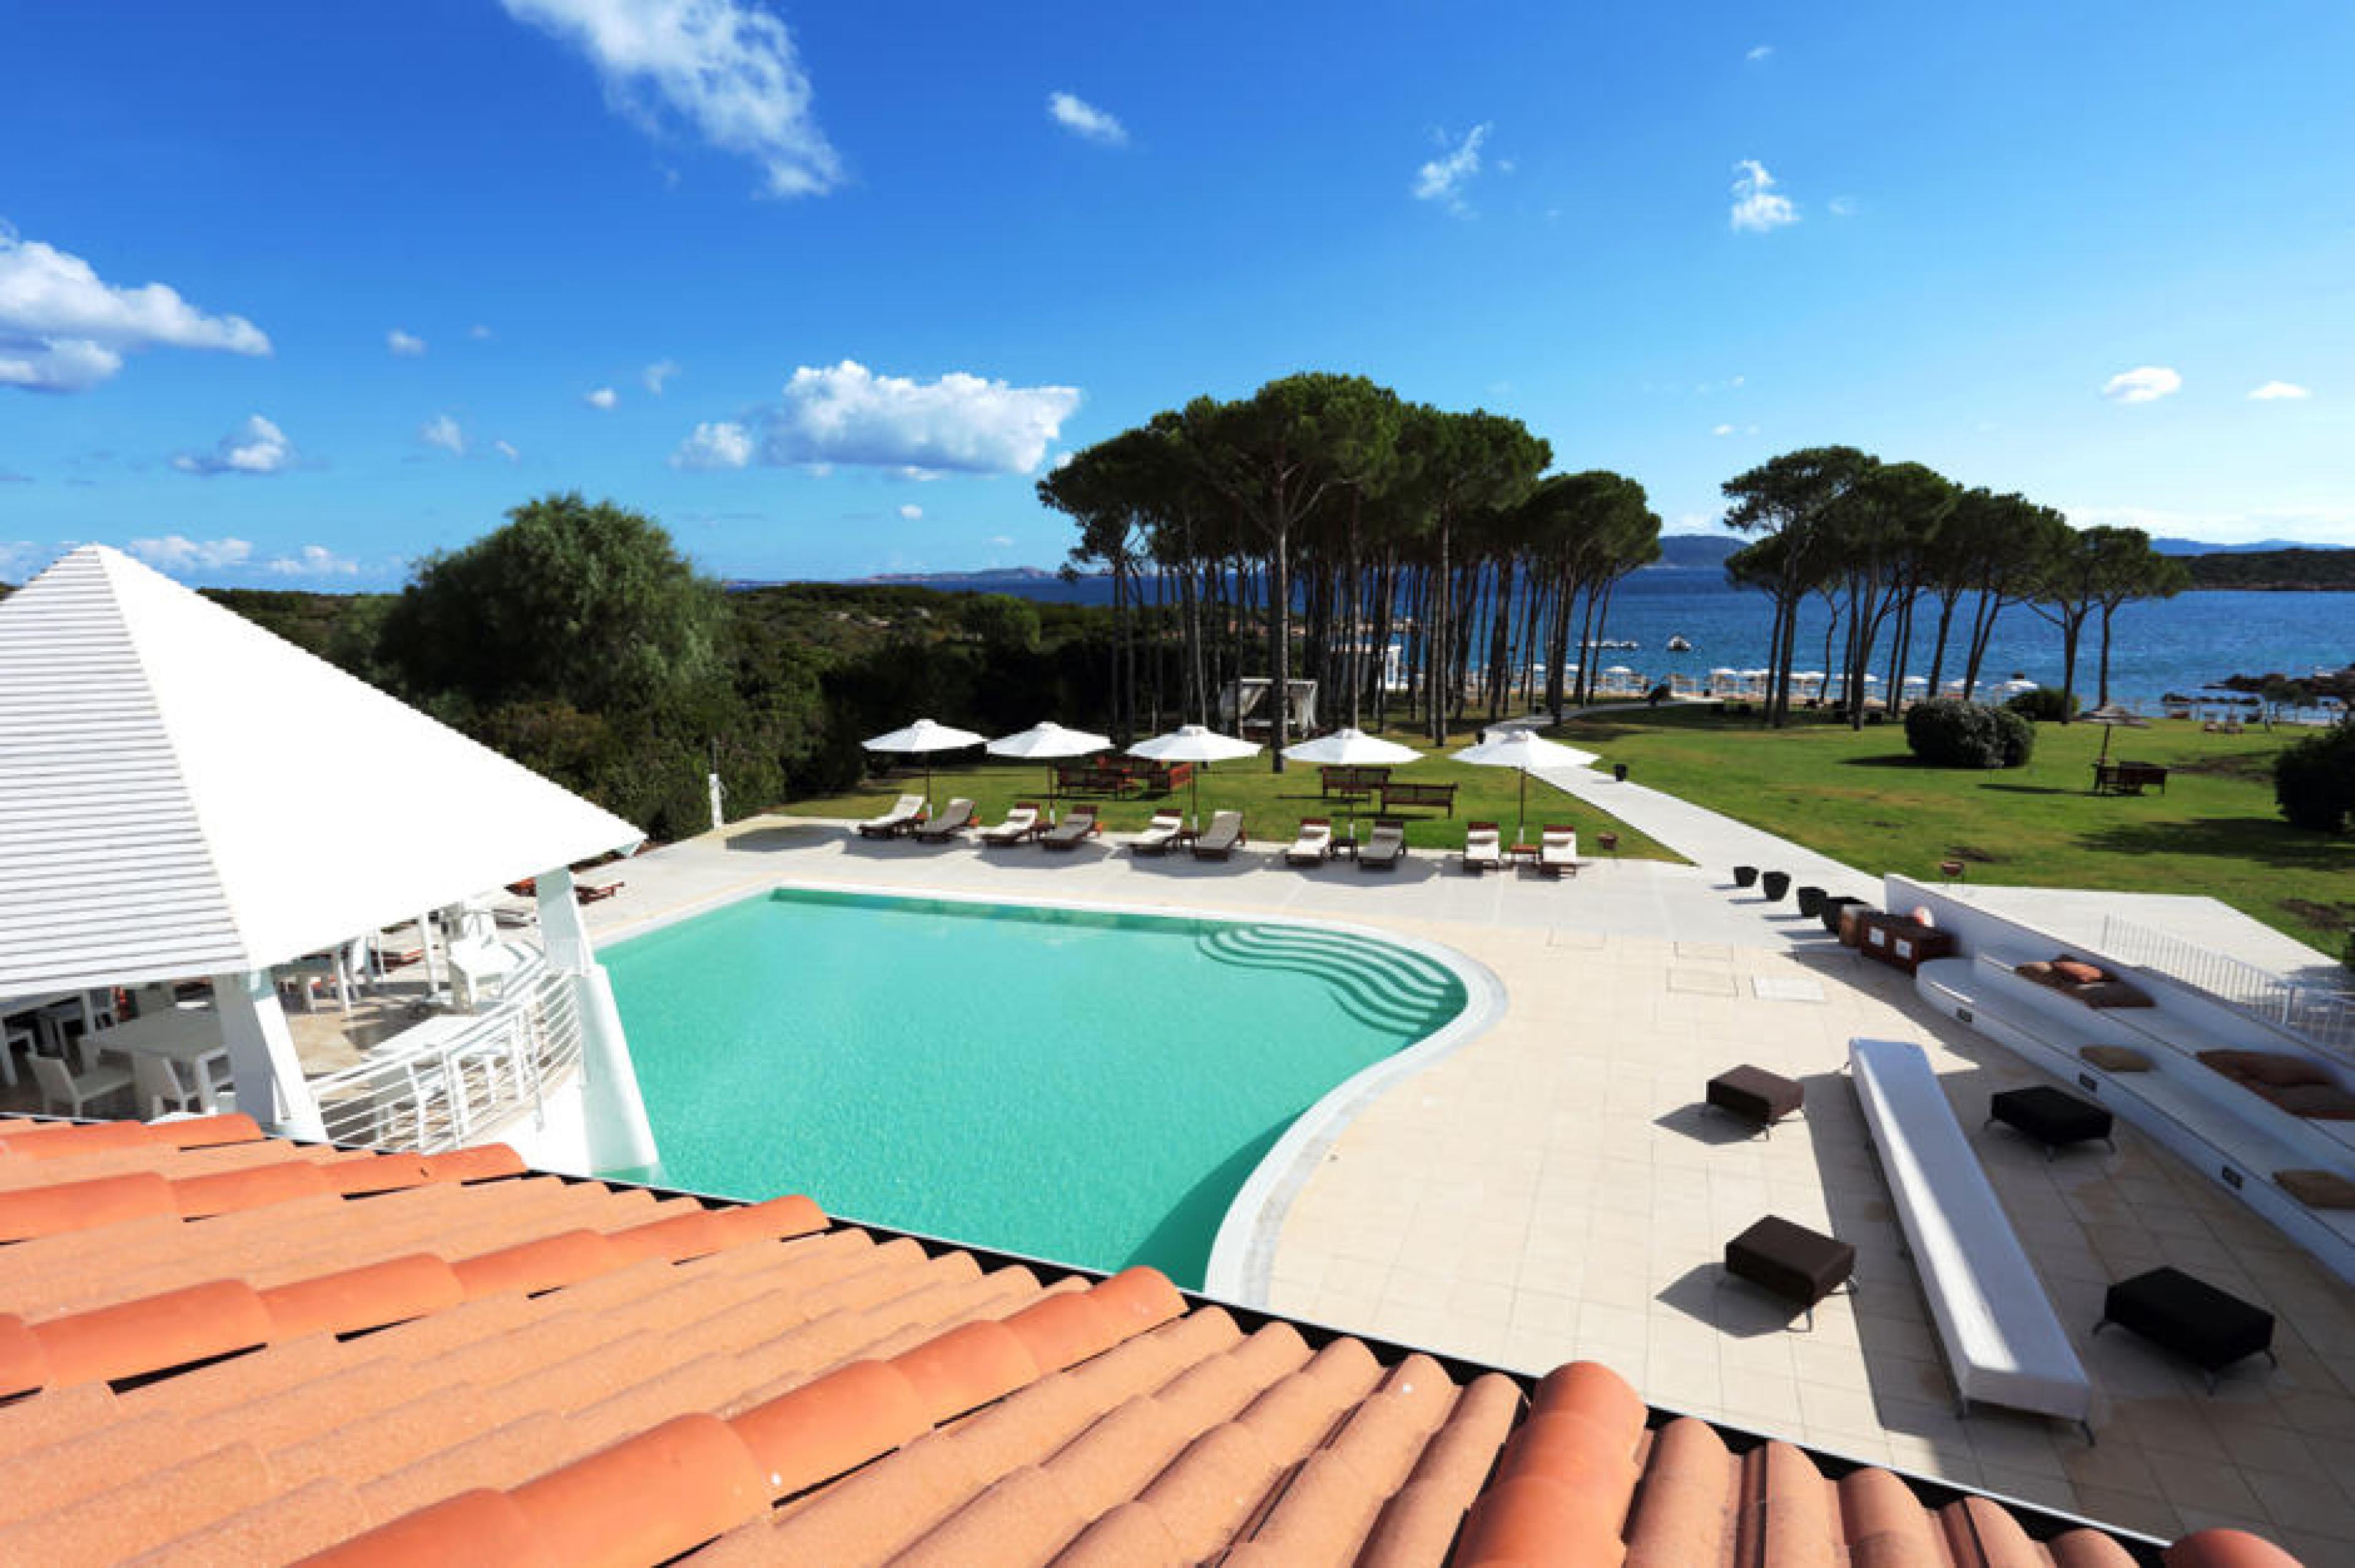 The Pool views at Forte Village Resort, Sardinia, Italy